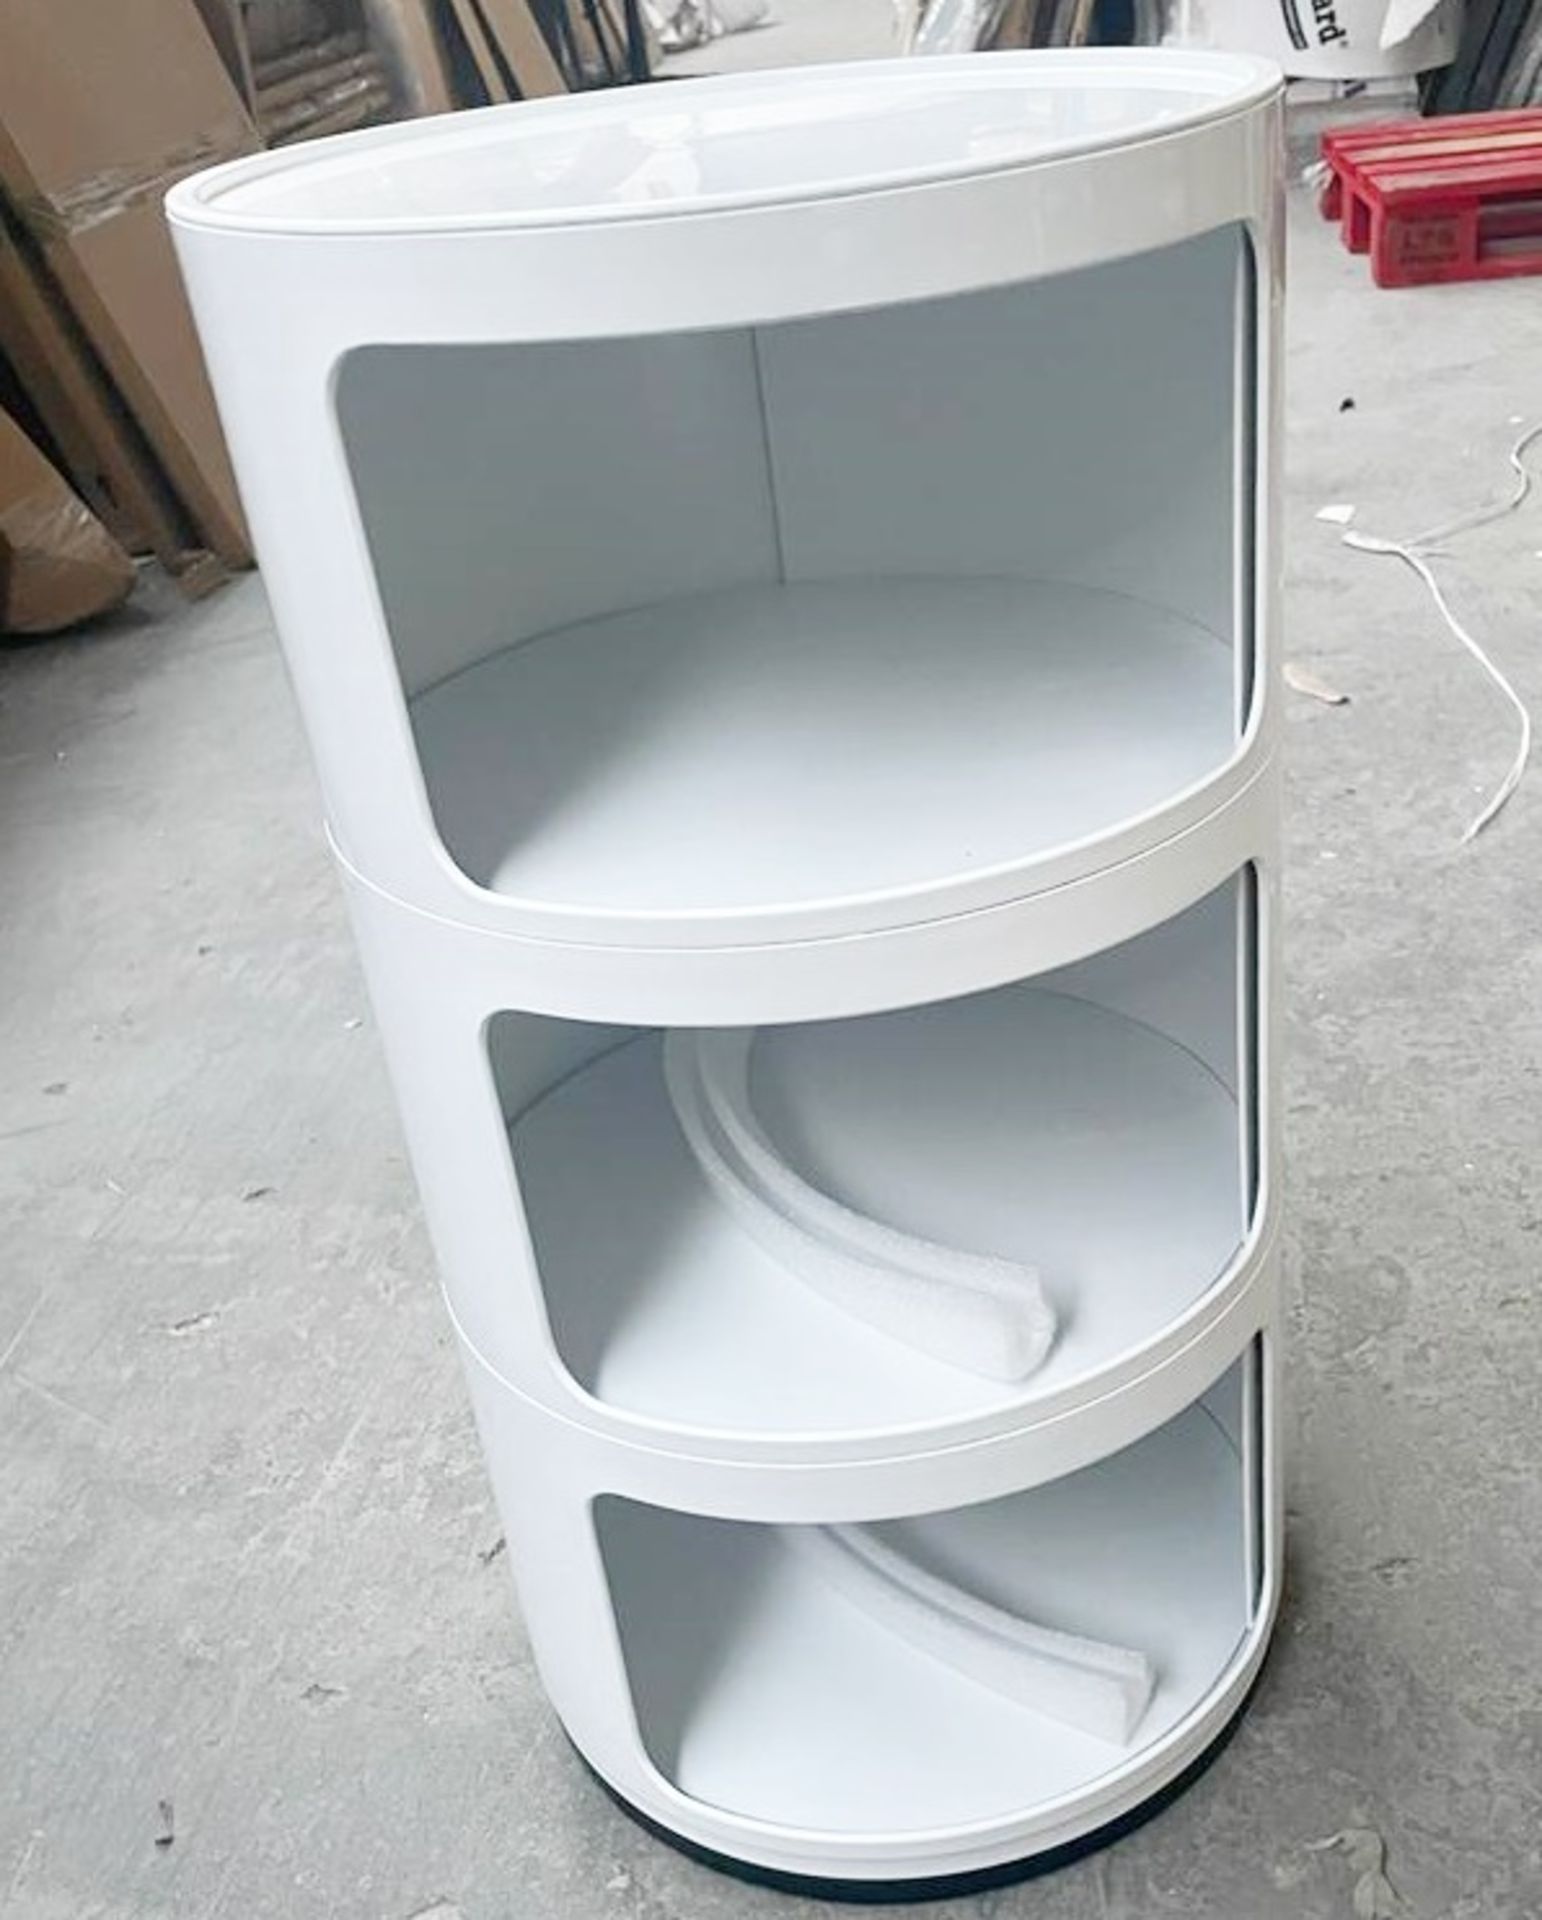 1 x 3 Tier Componibili Storage Unit White - Dimensions: 32(w) x 32(d) x 60(h) cm - Brand New Boxed S - Image 5 of 6